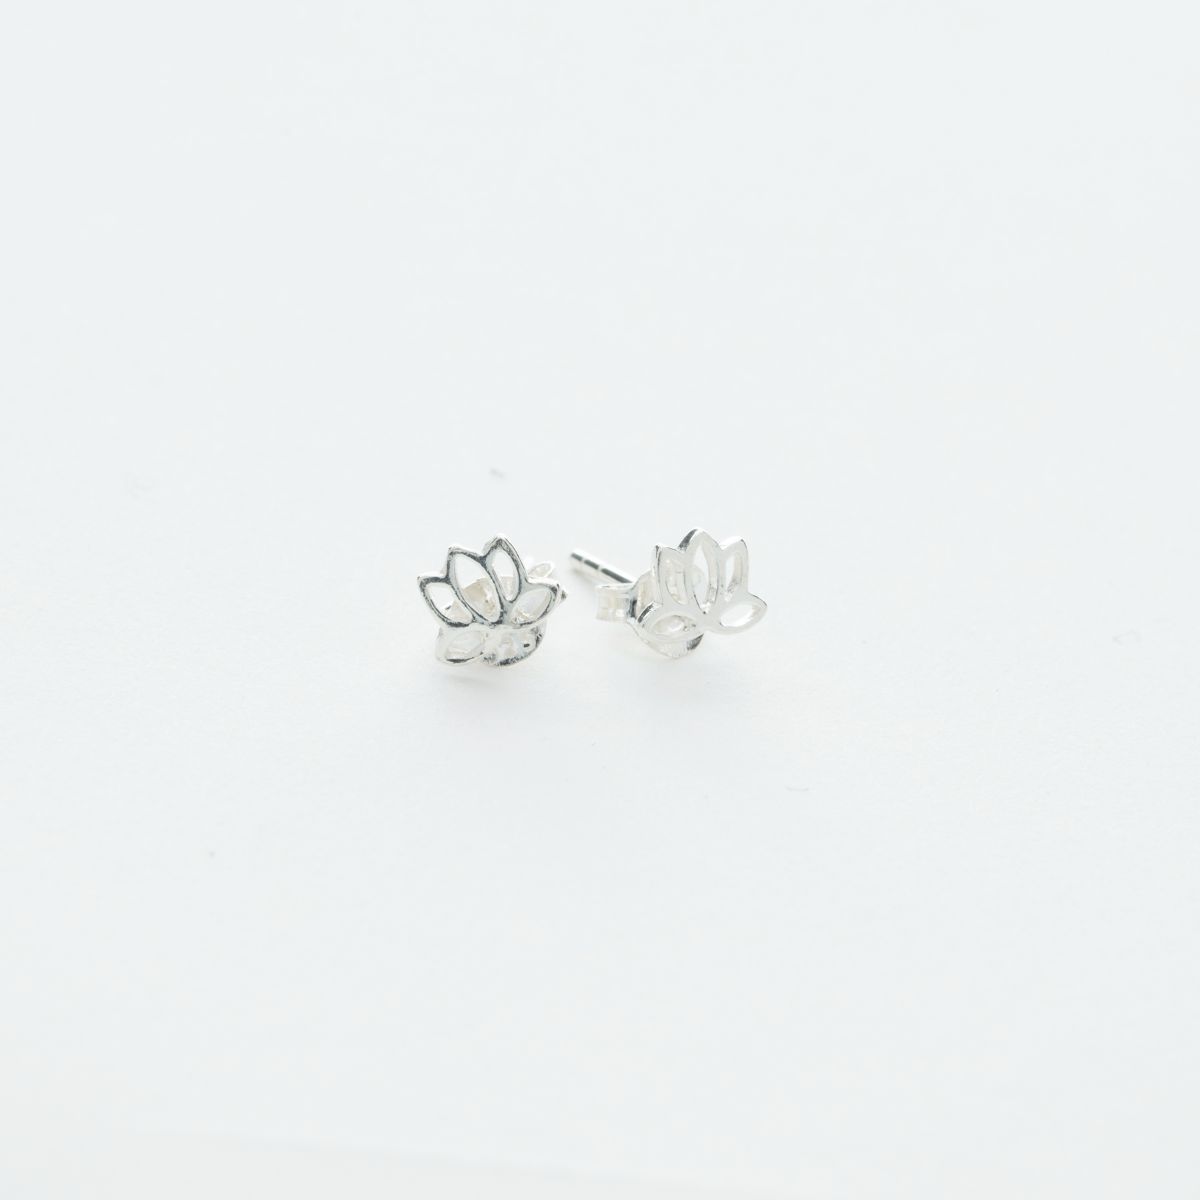 Tiny Lotus Flower Cutout Stud Earrings in Sterling Silver